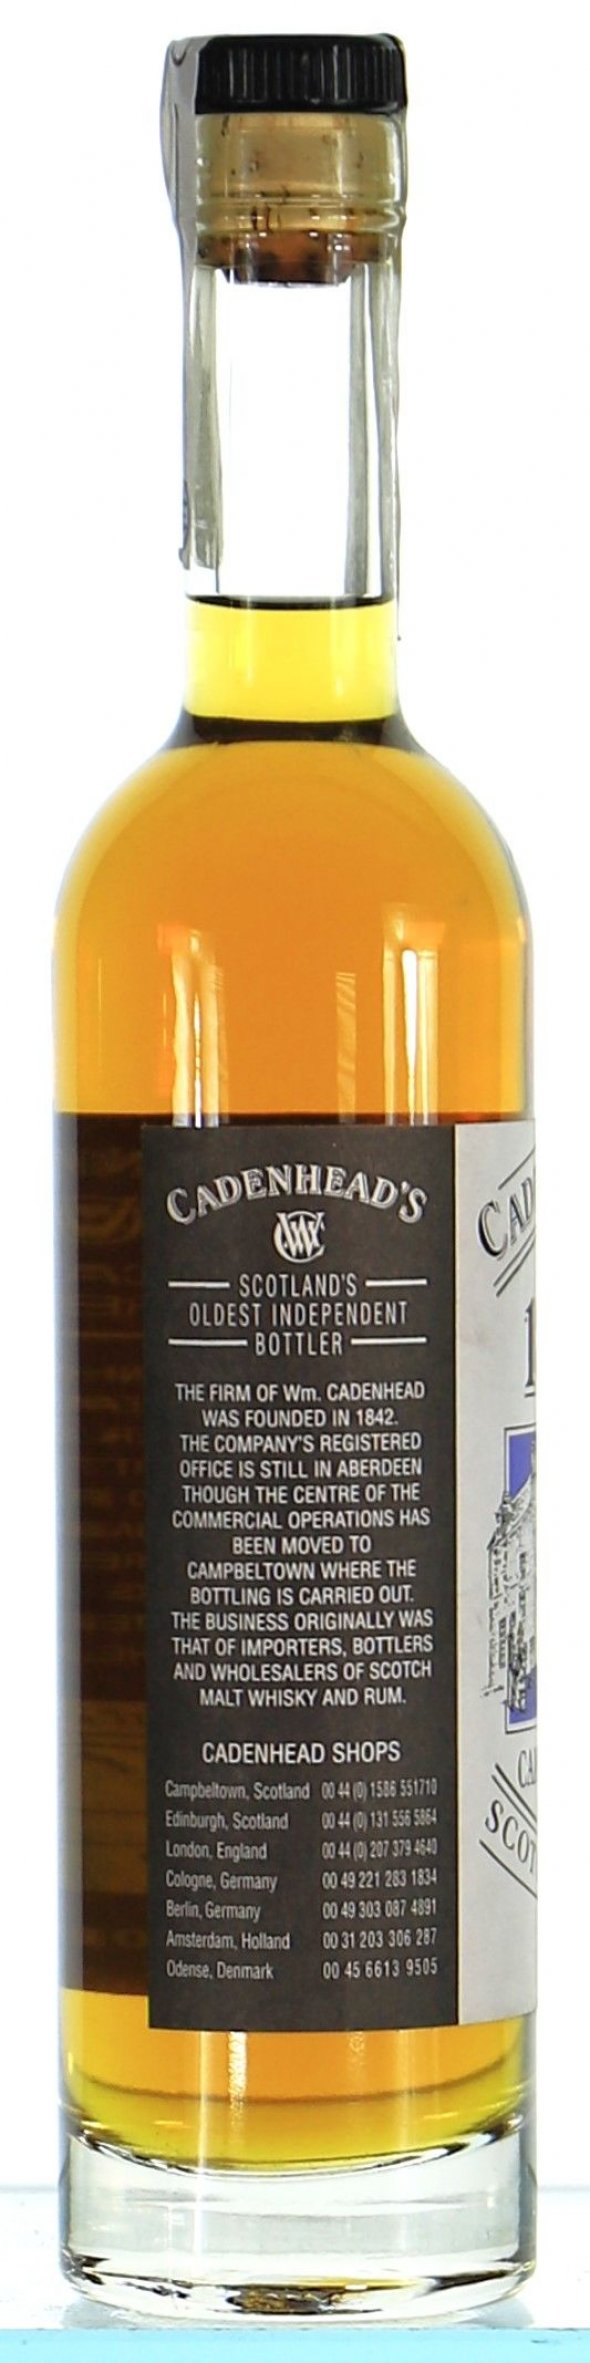 Cadenhead s Cask Strength Campbeltown Malt Whisky